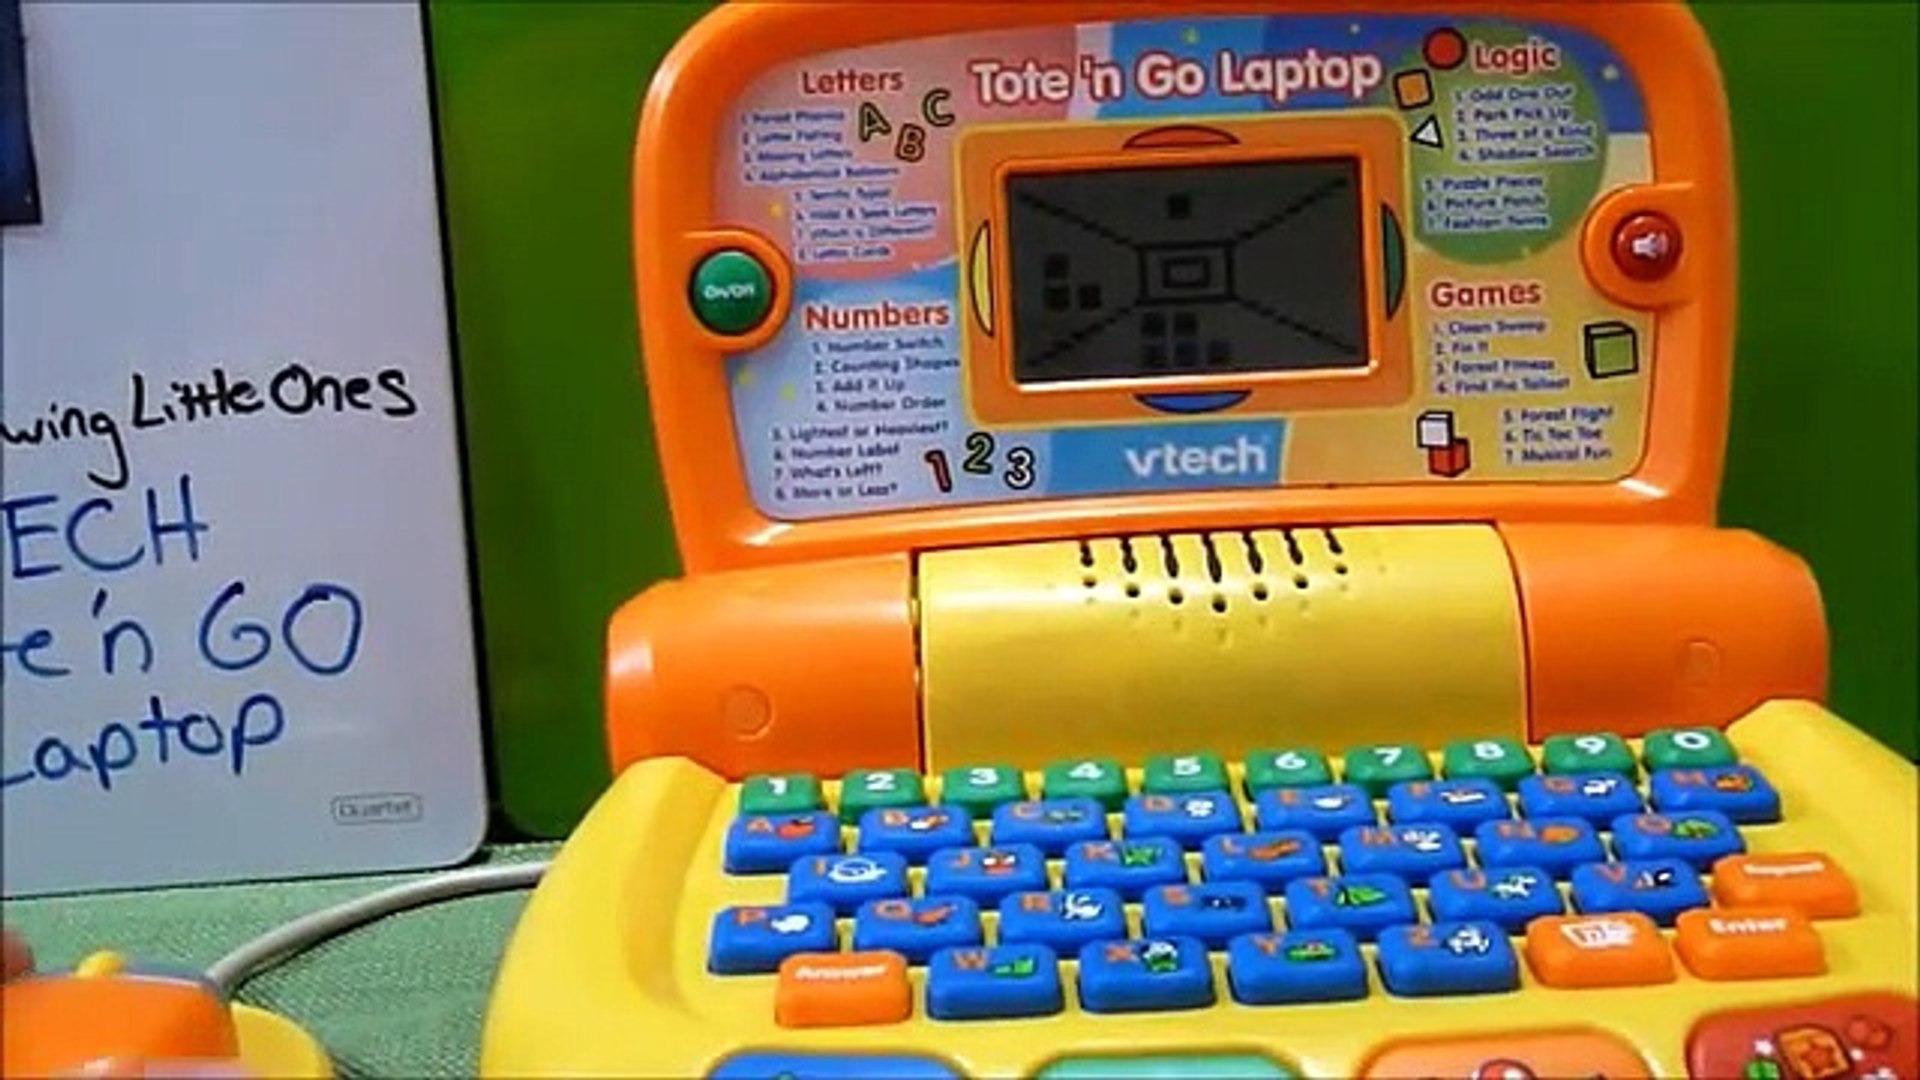 VTech Tote 'N Go Laptop